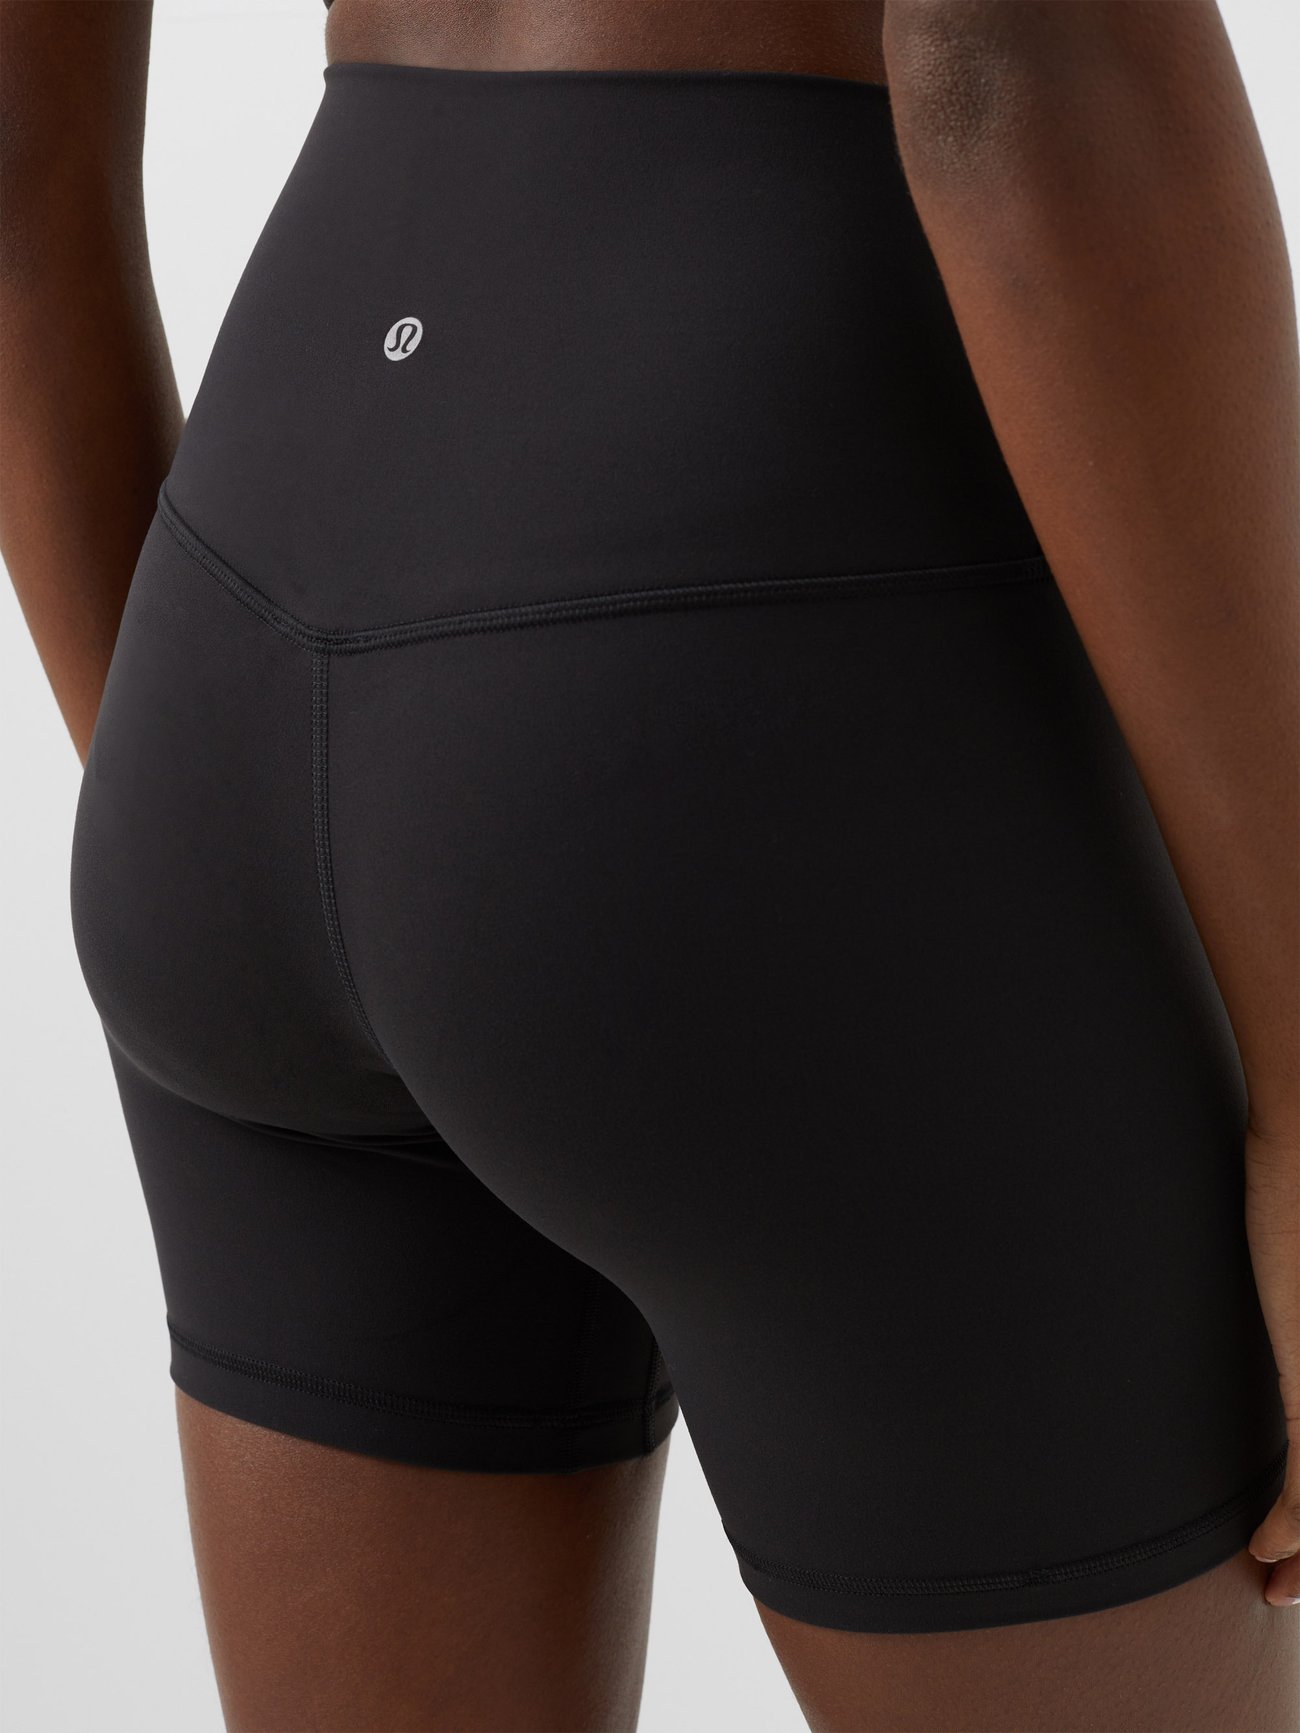 Lululemon Black and White Patterned Speed Shorts- Size 4 – The